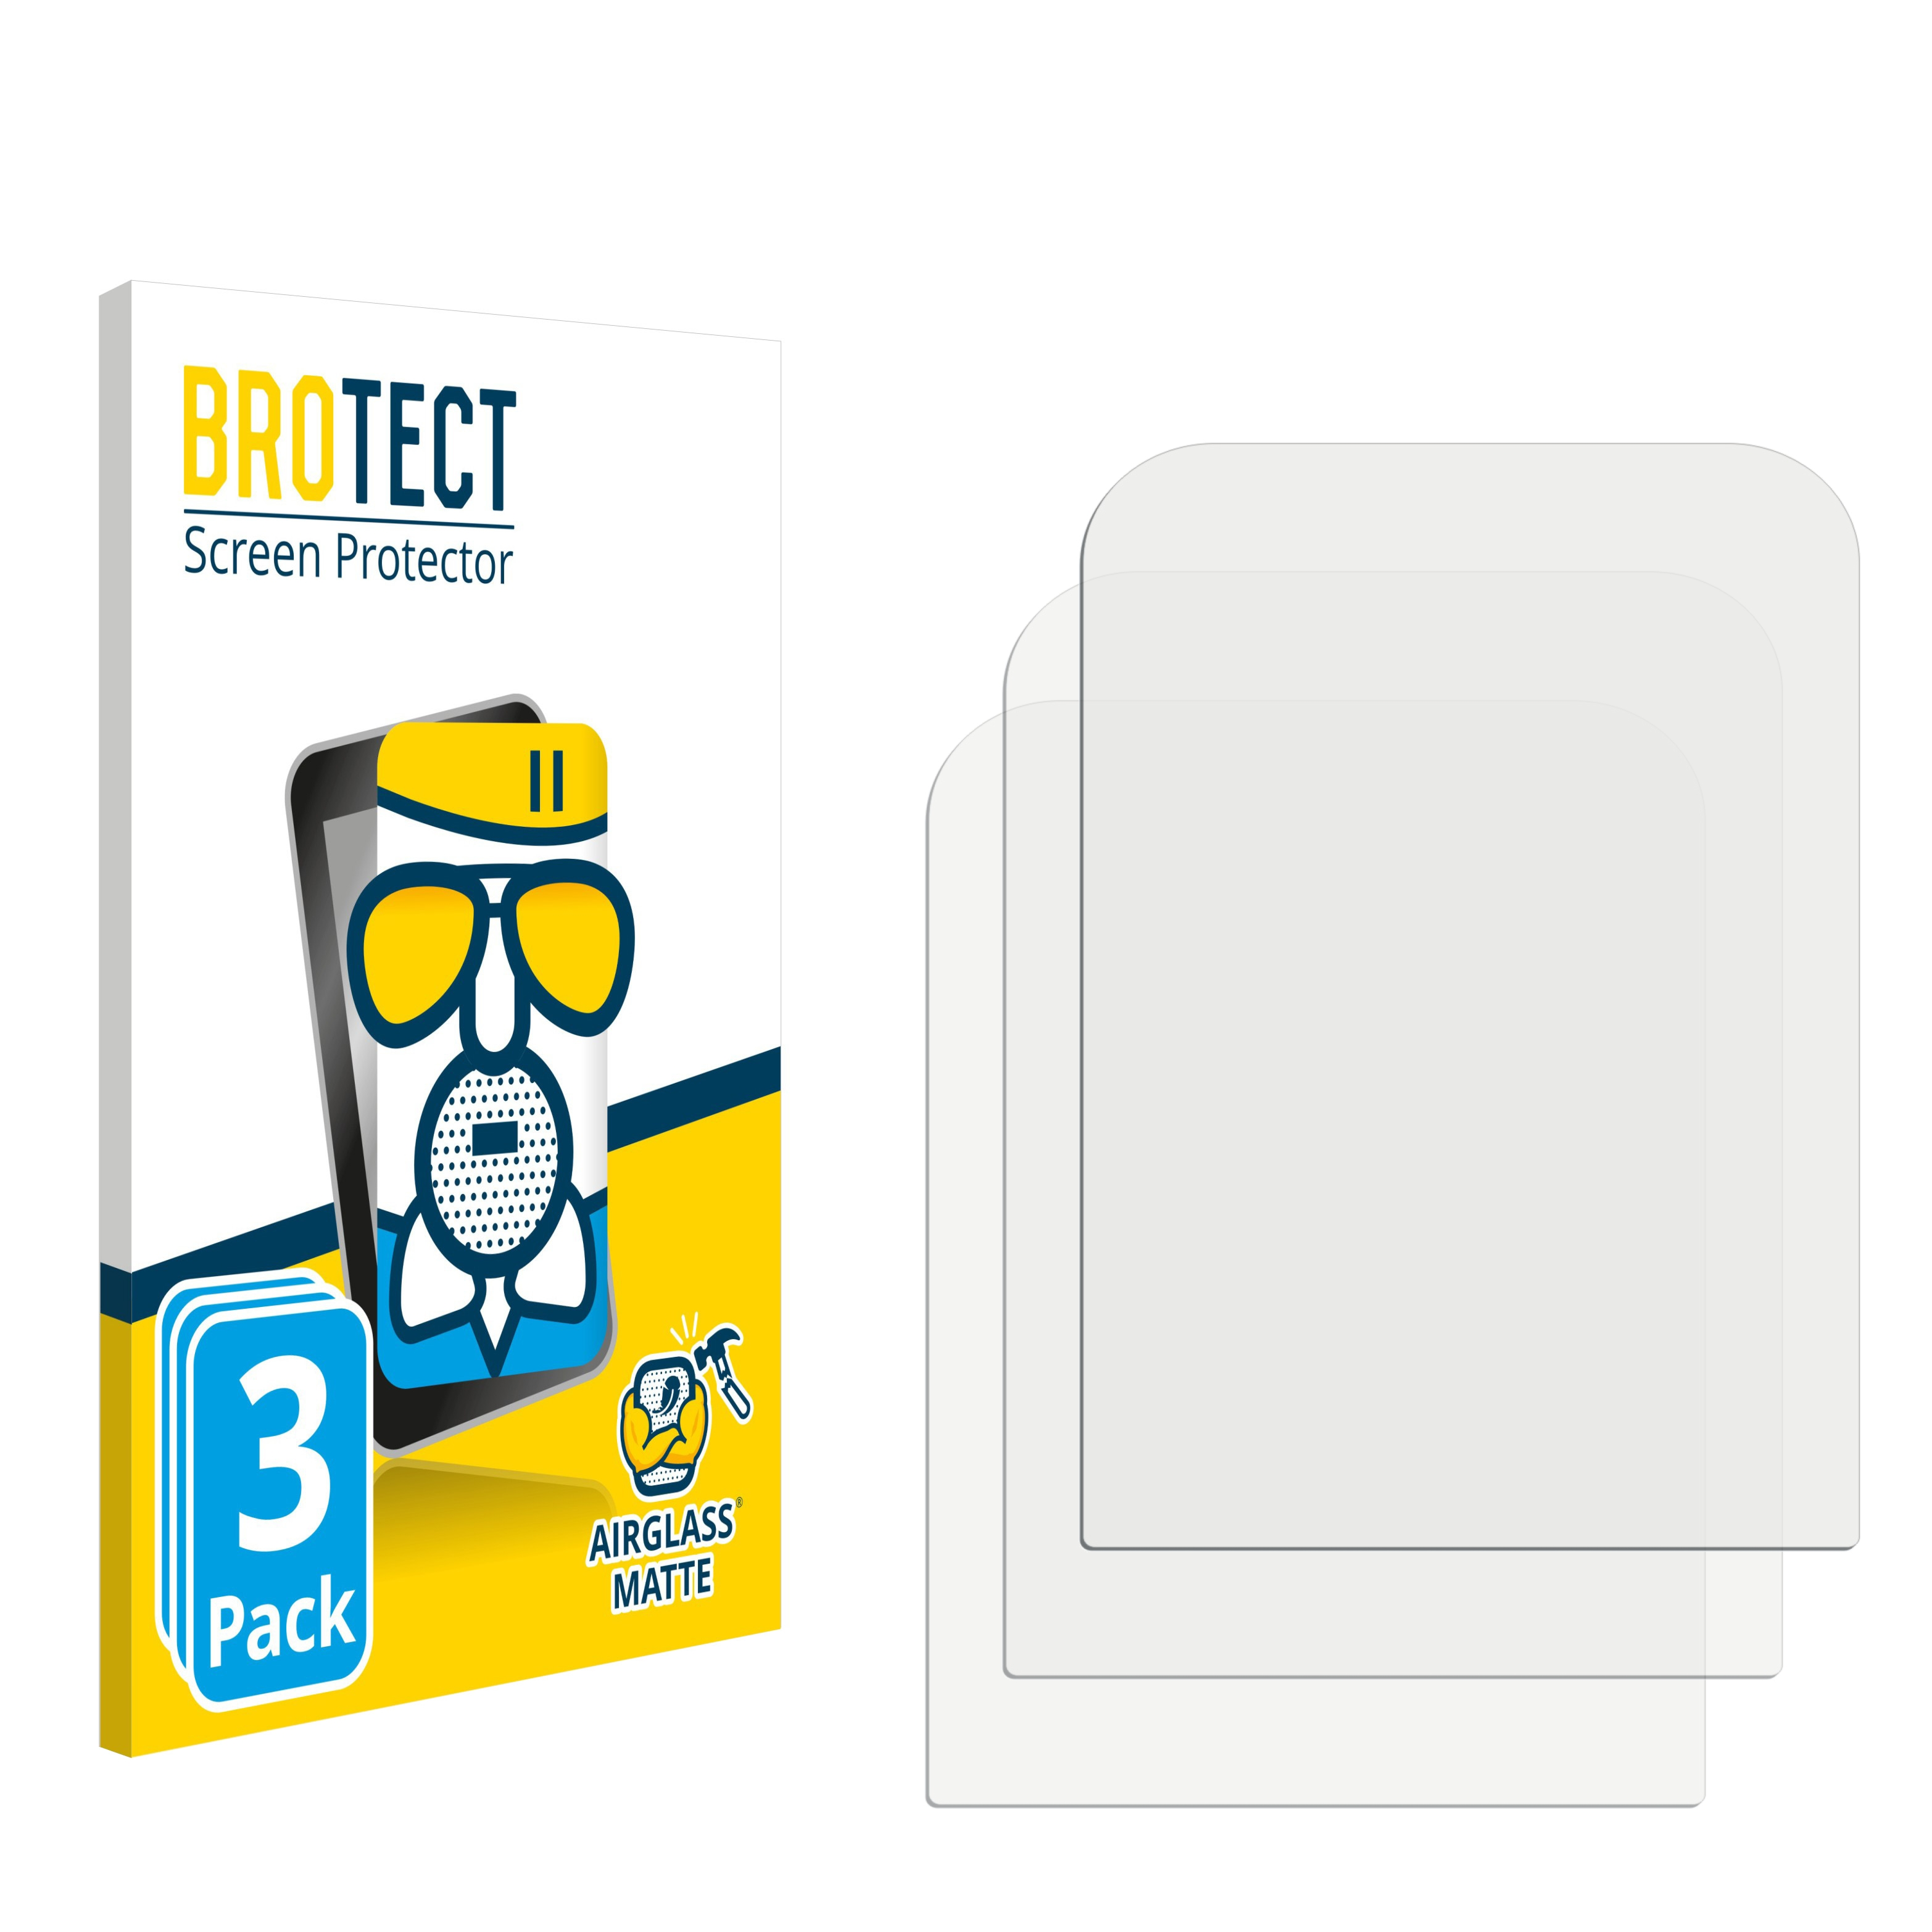 BROTECT 3x OmniTouch matte Airglass 8128) Alcatel Schutzfolie(für